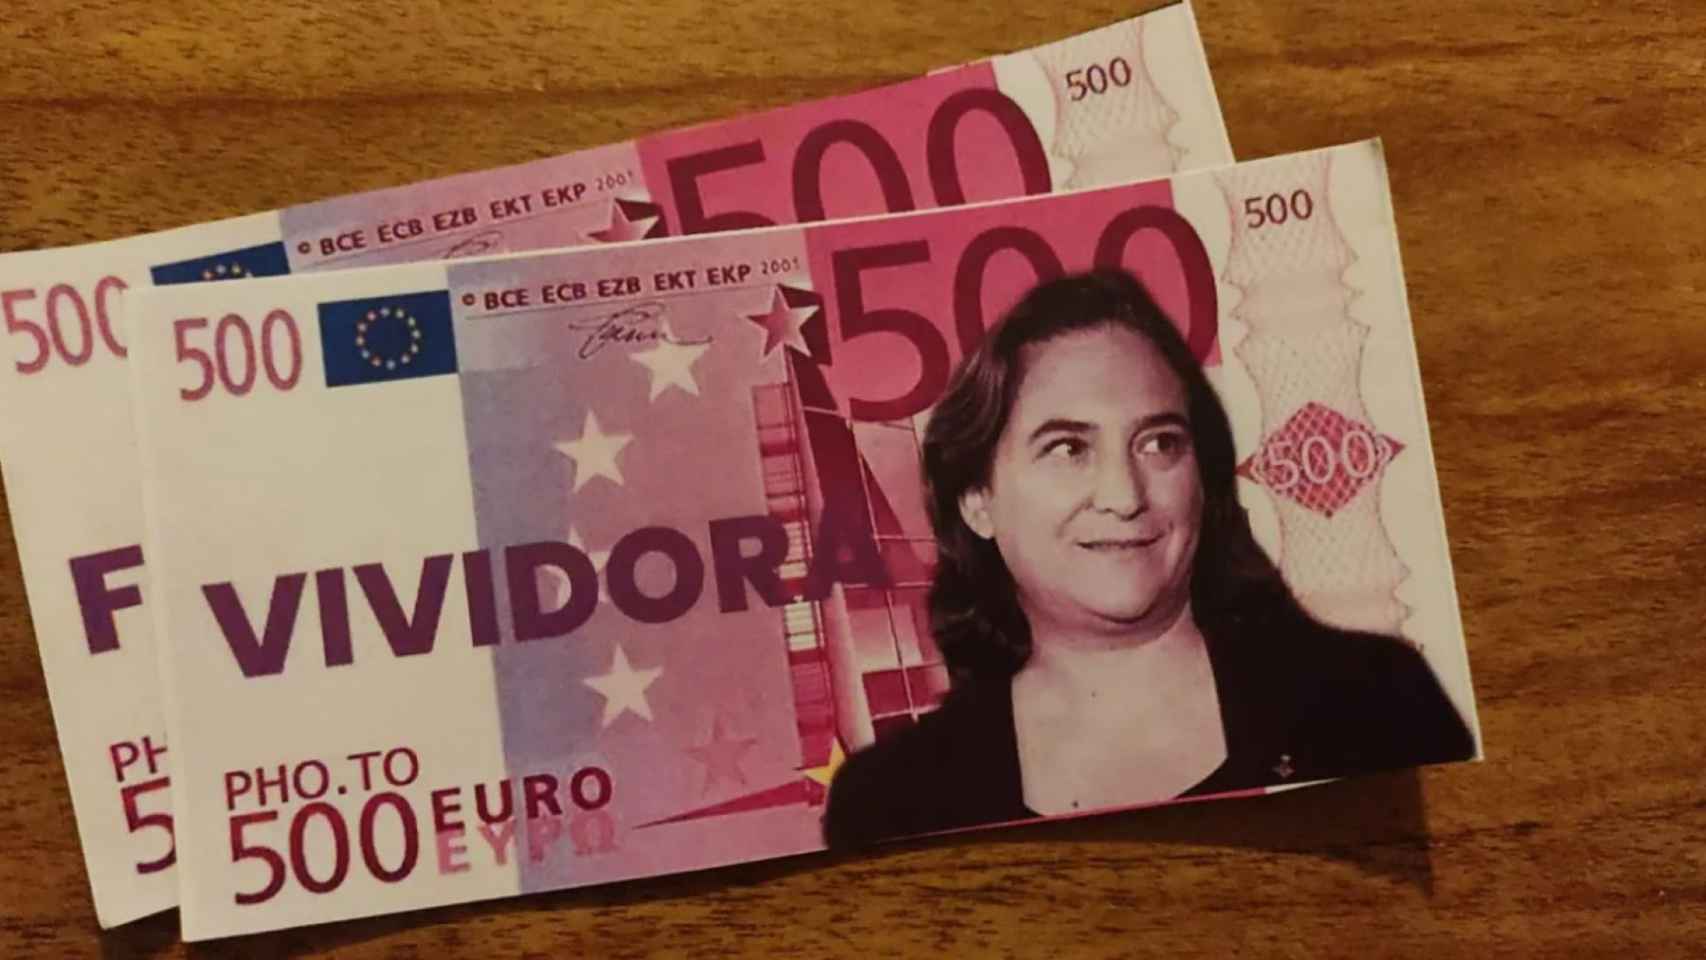 Billetes falsos de 500 euros con la cara de la alcaldesa de Barcelona, Ada Colau